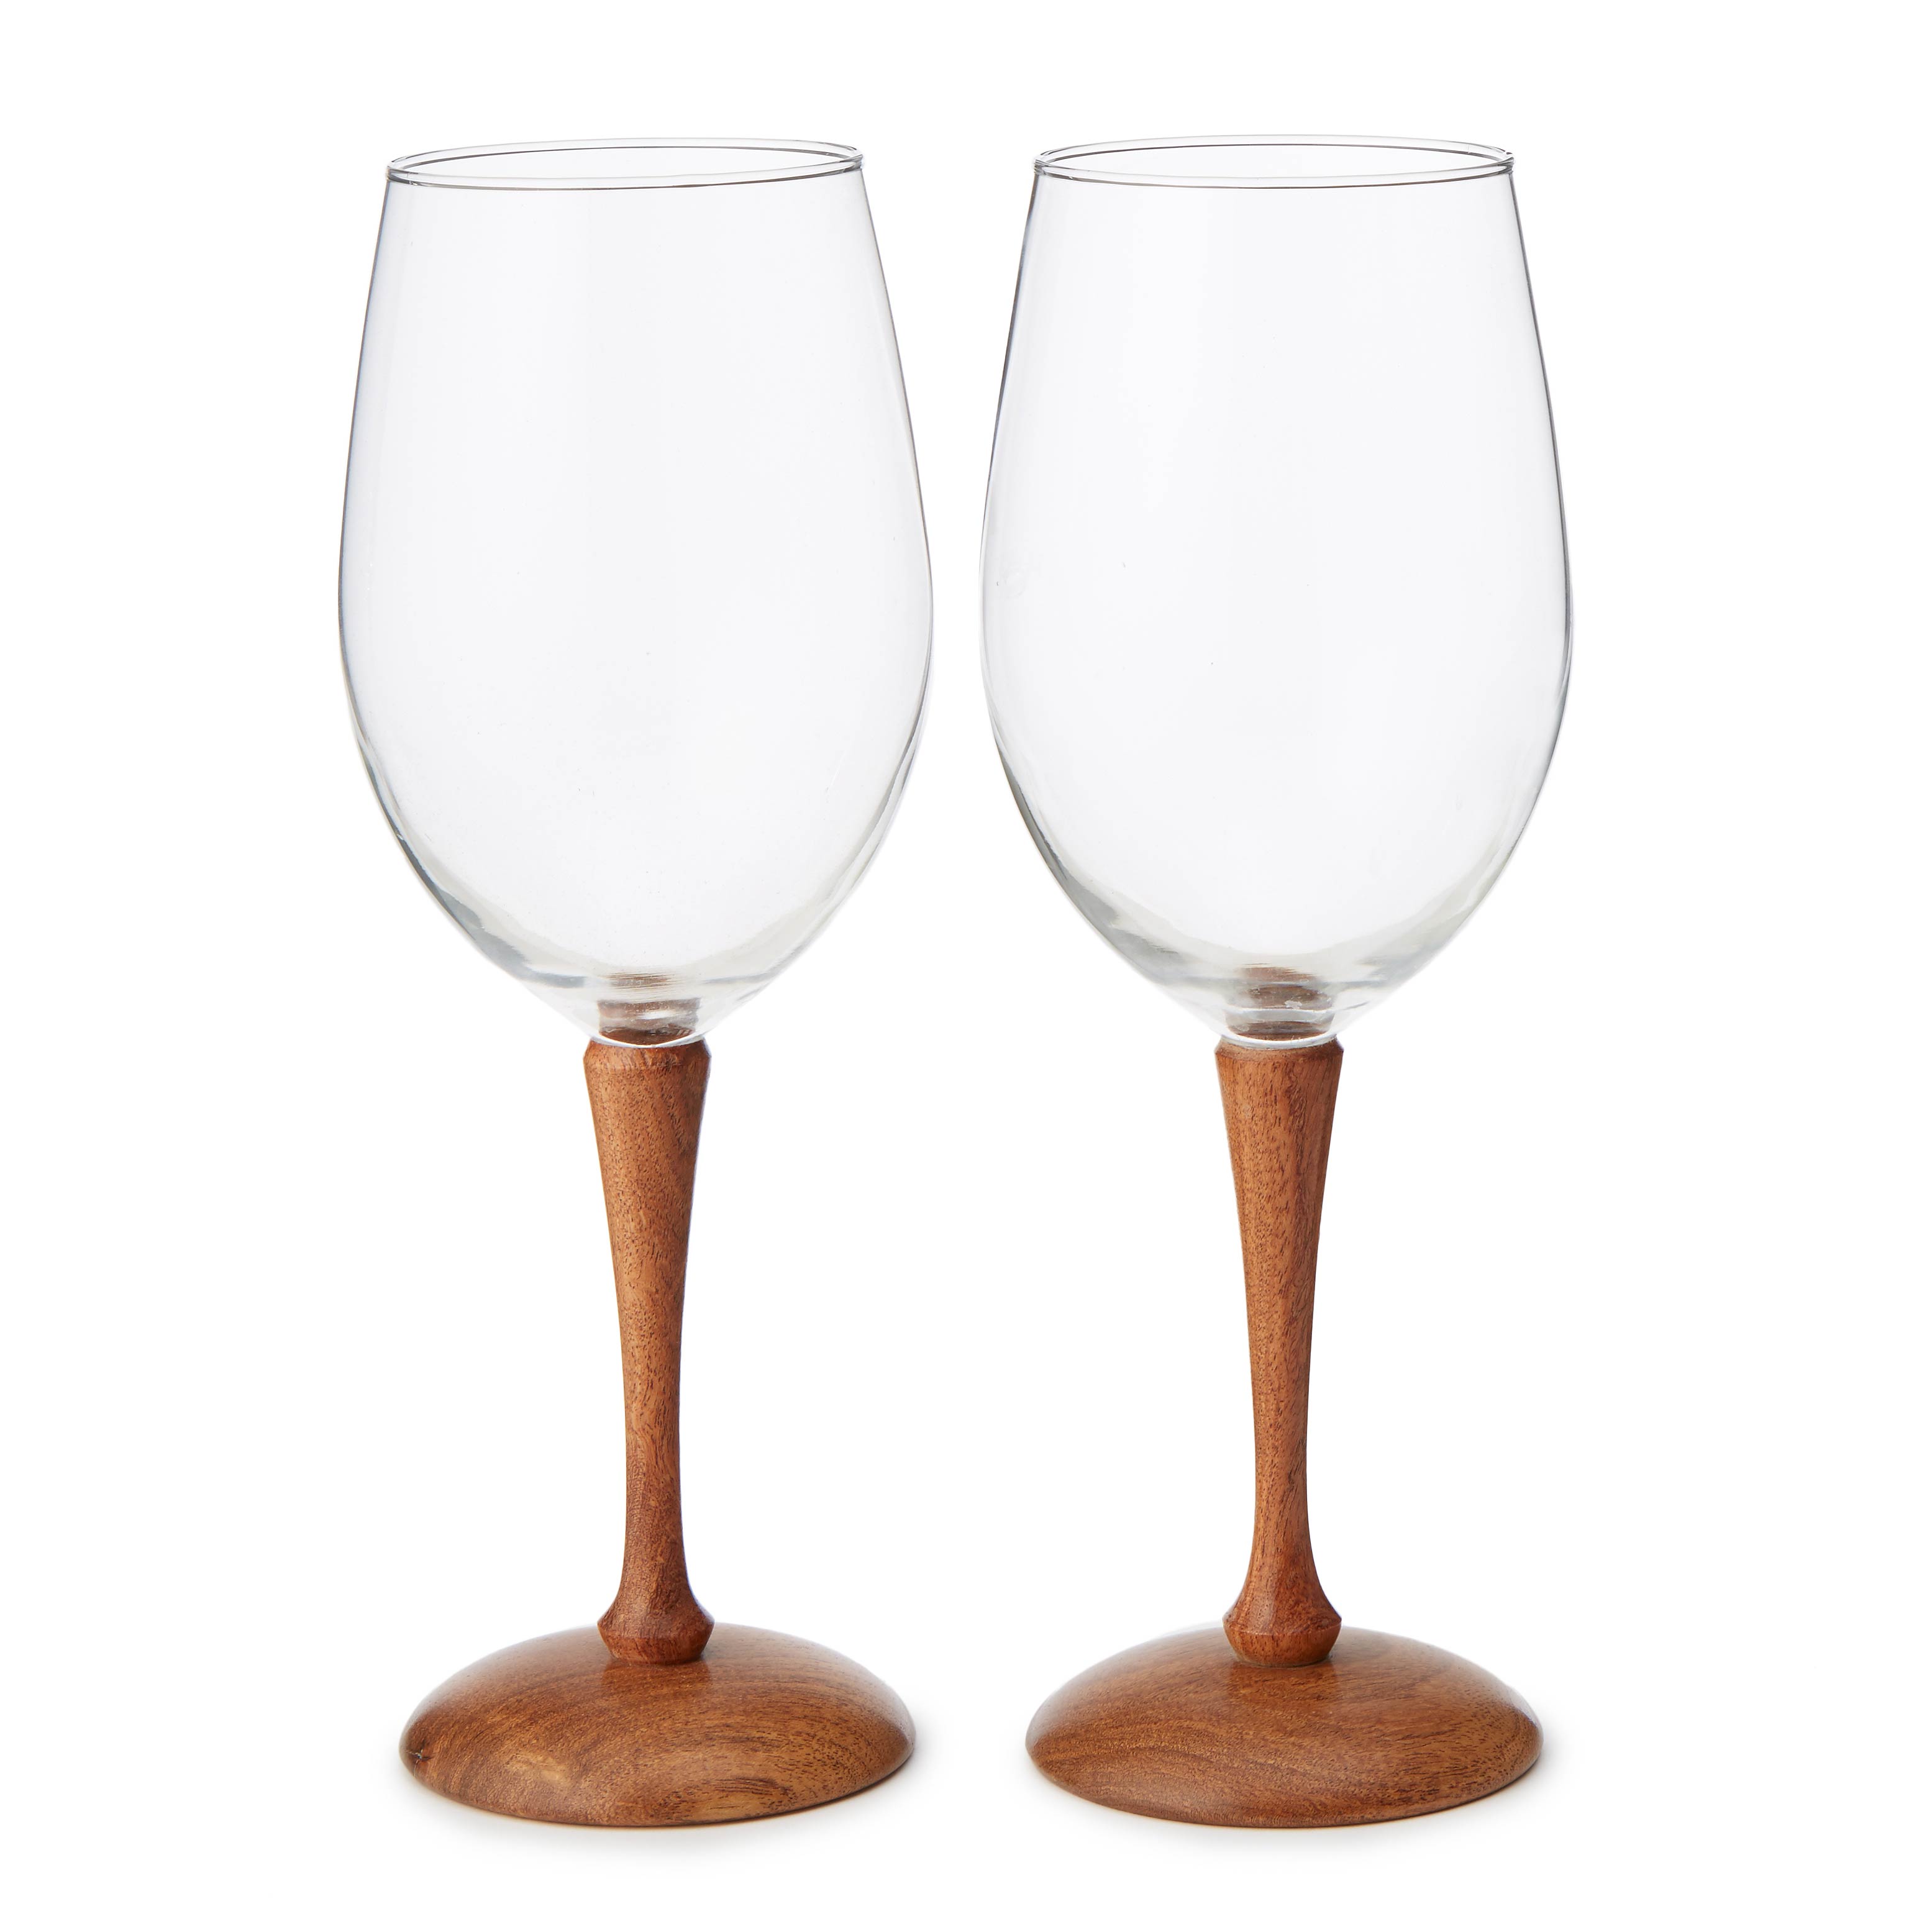 Wood Stem Wine Glasses - Set of 2 | mesquite wood | UncommonGoods